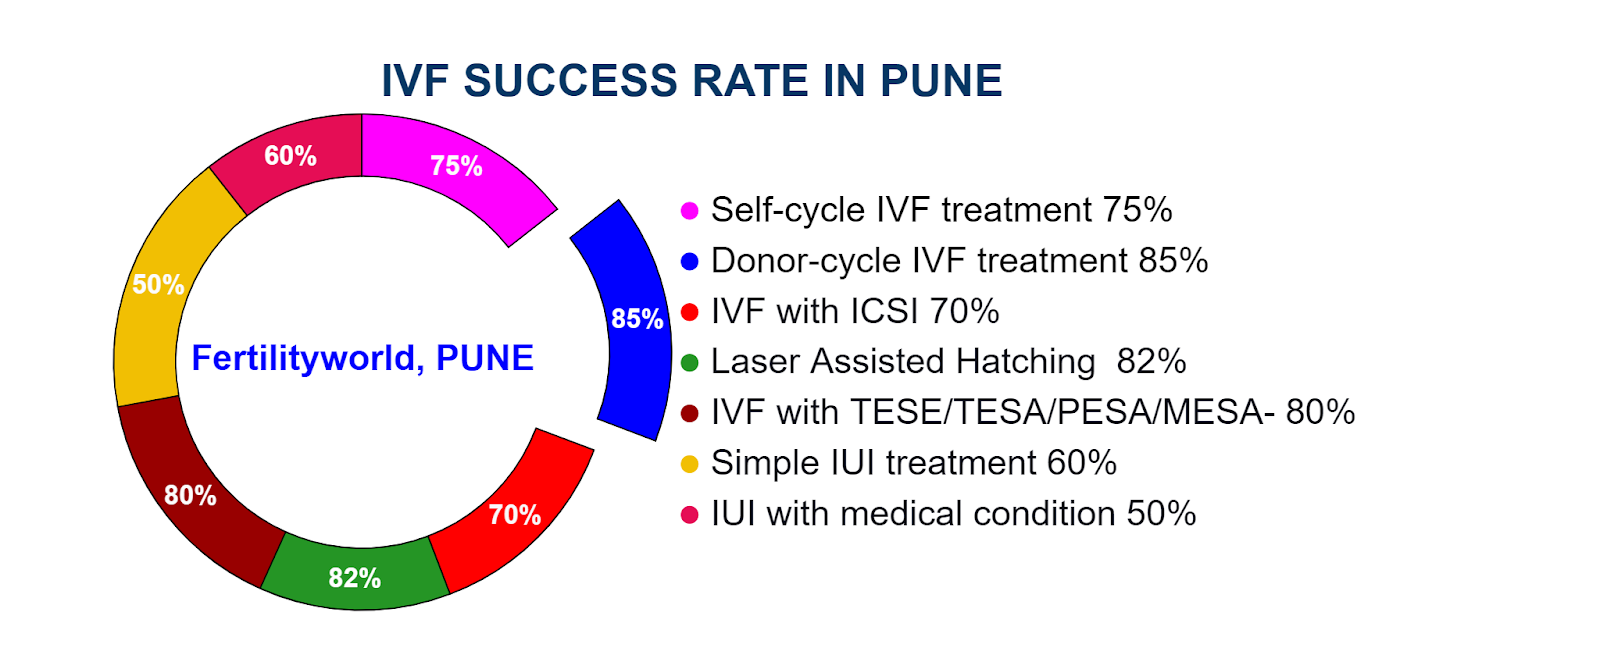  IVF success rate in Pune